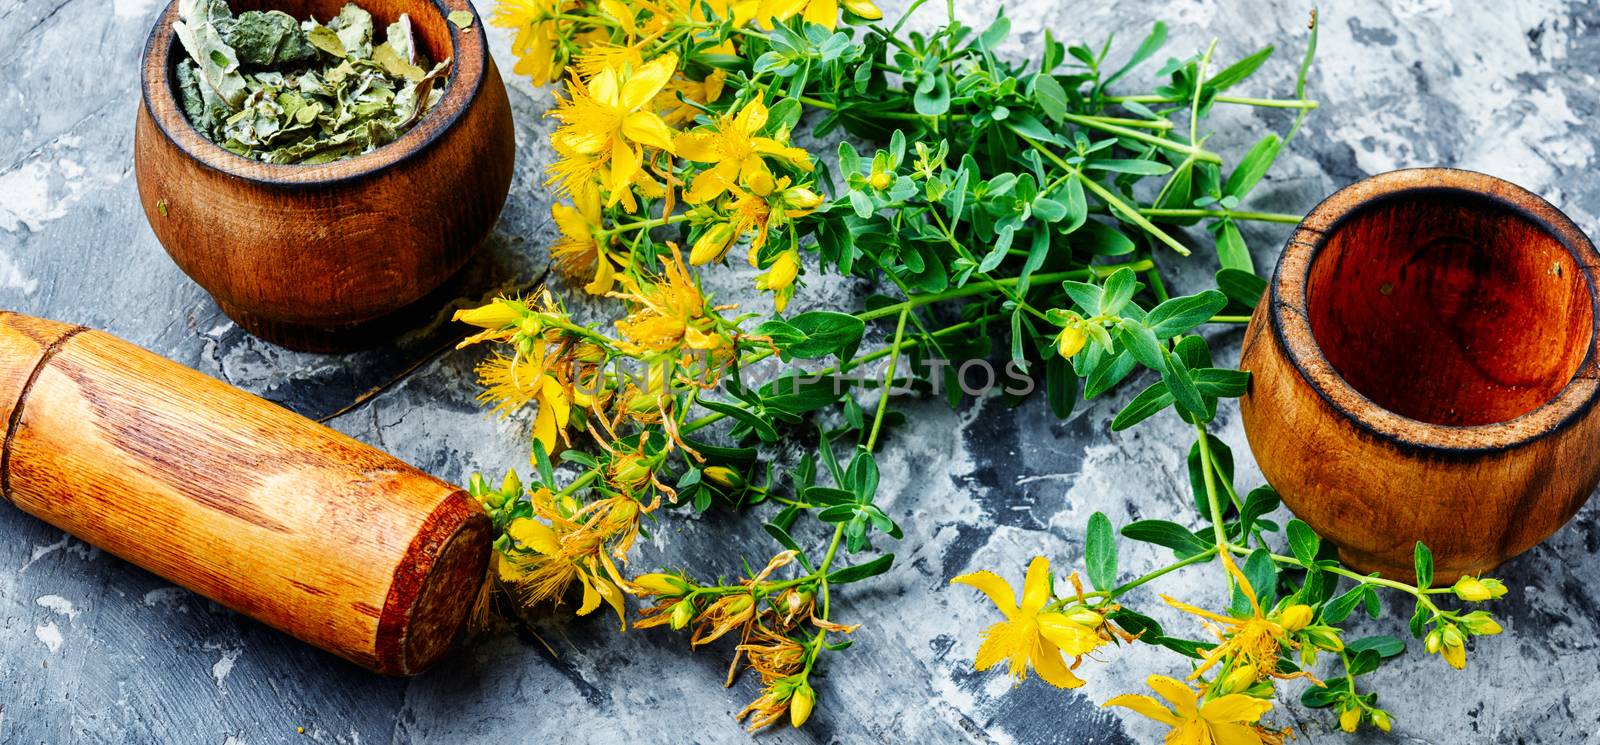 Herbal medicine.Medicinal herbs.Natural herbs medicine.Bunch of hypericum